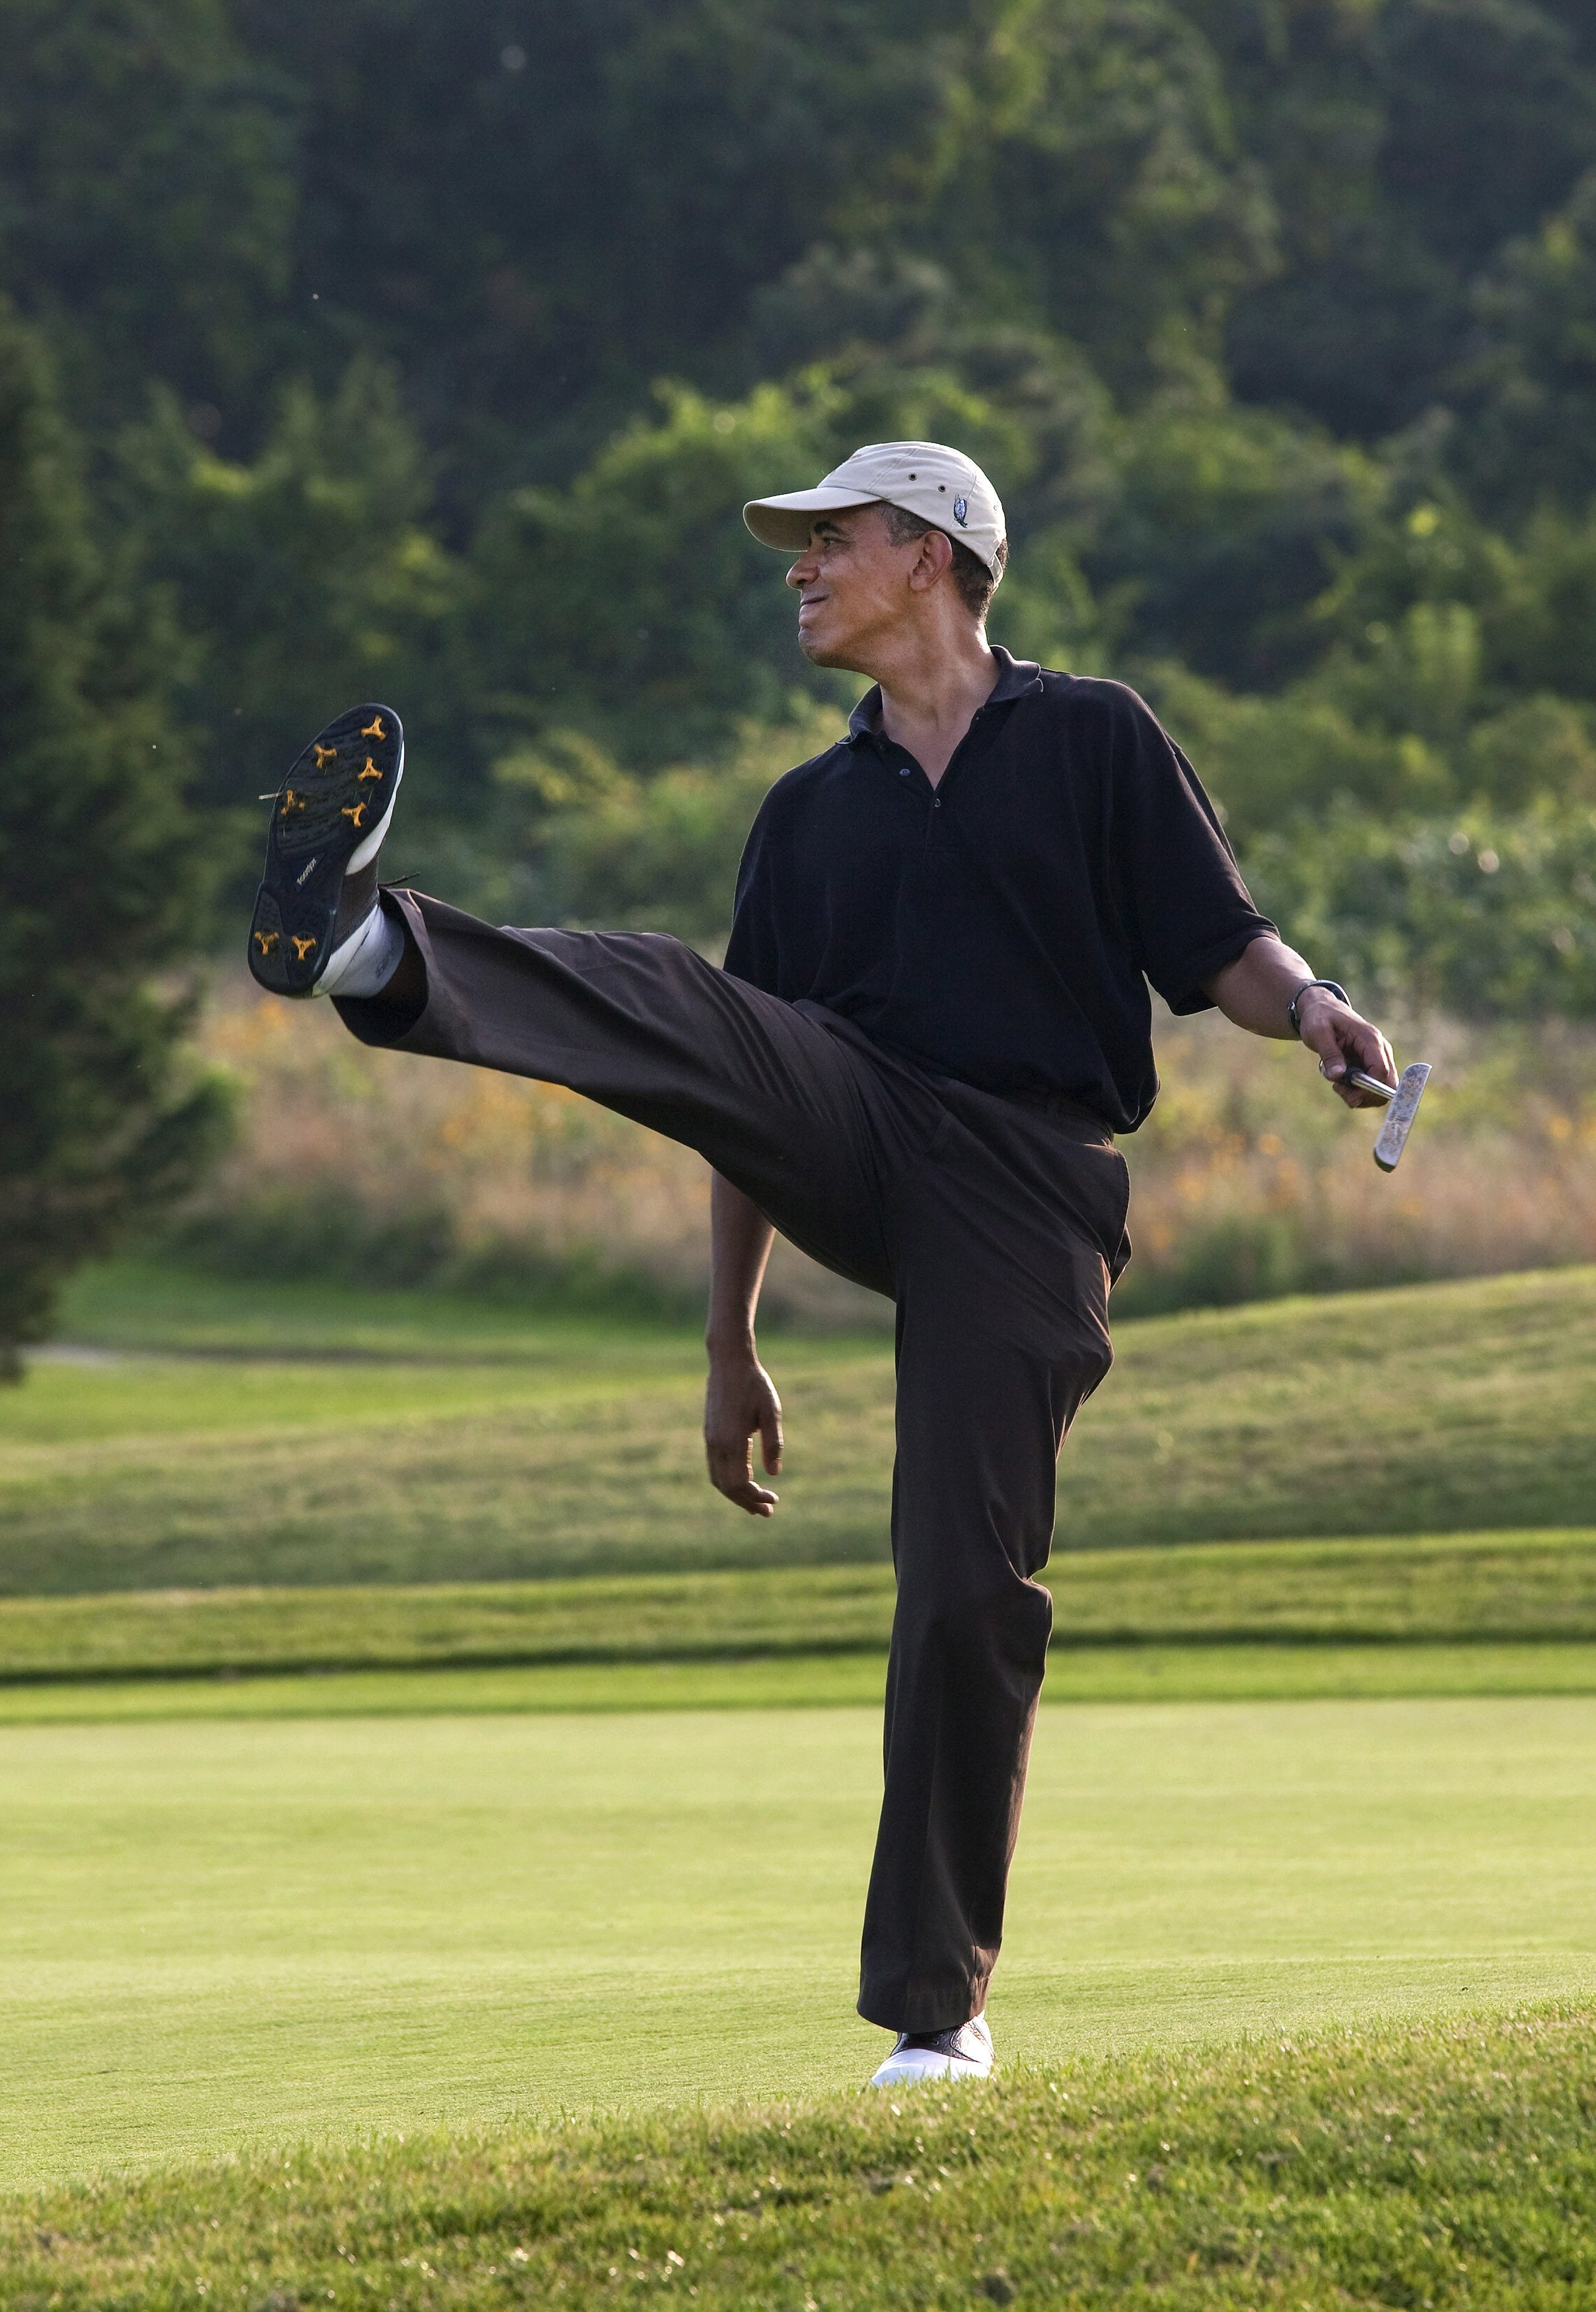 obama golf free use